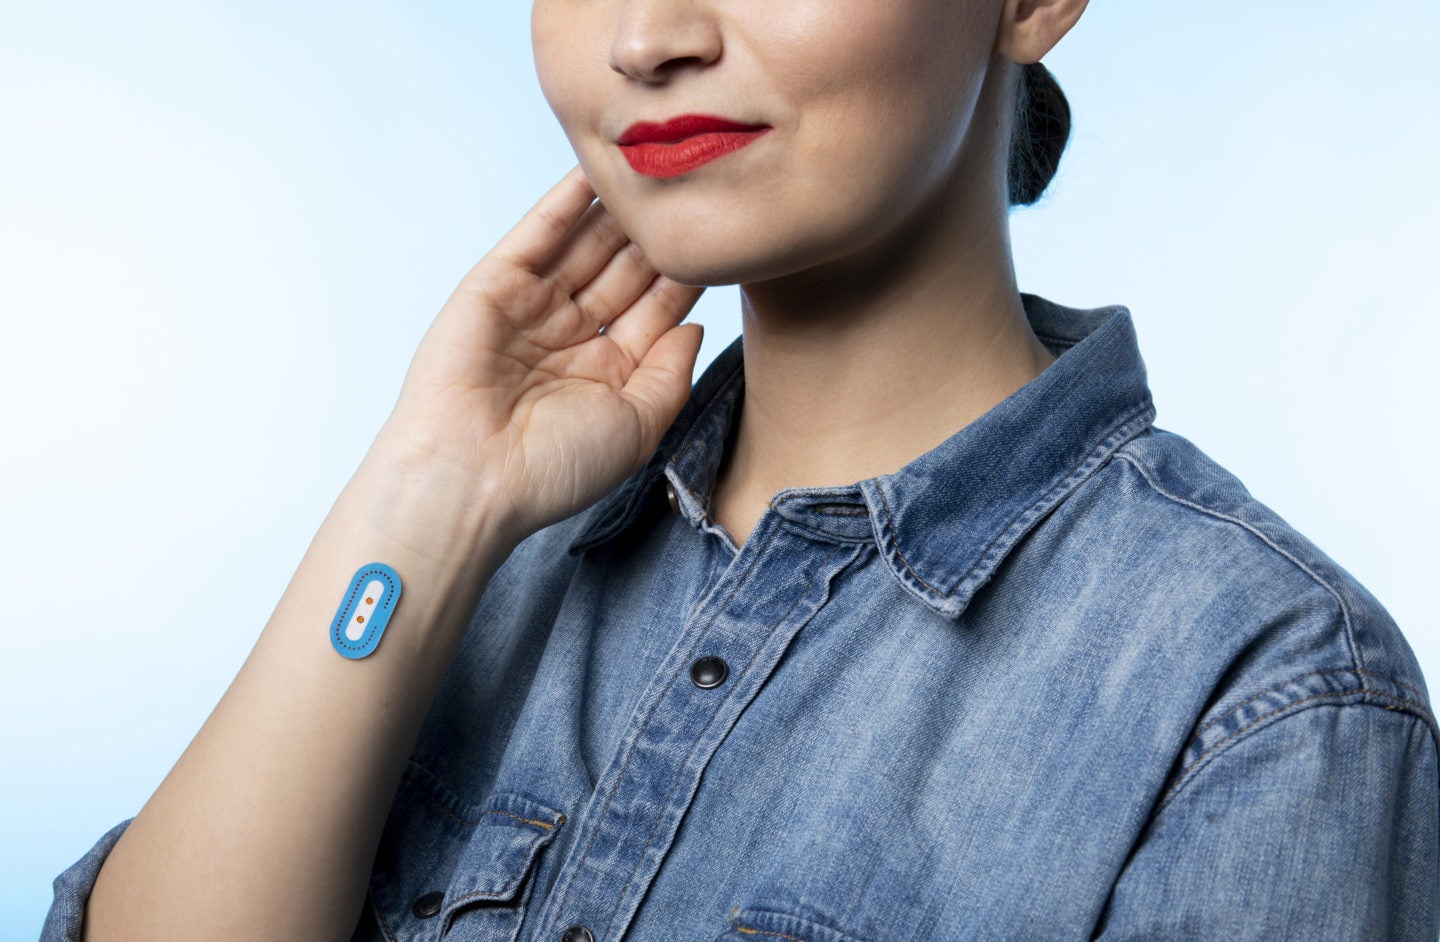 L’Oreal’s wearable pH sensor brings technology to skincare